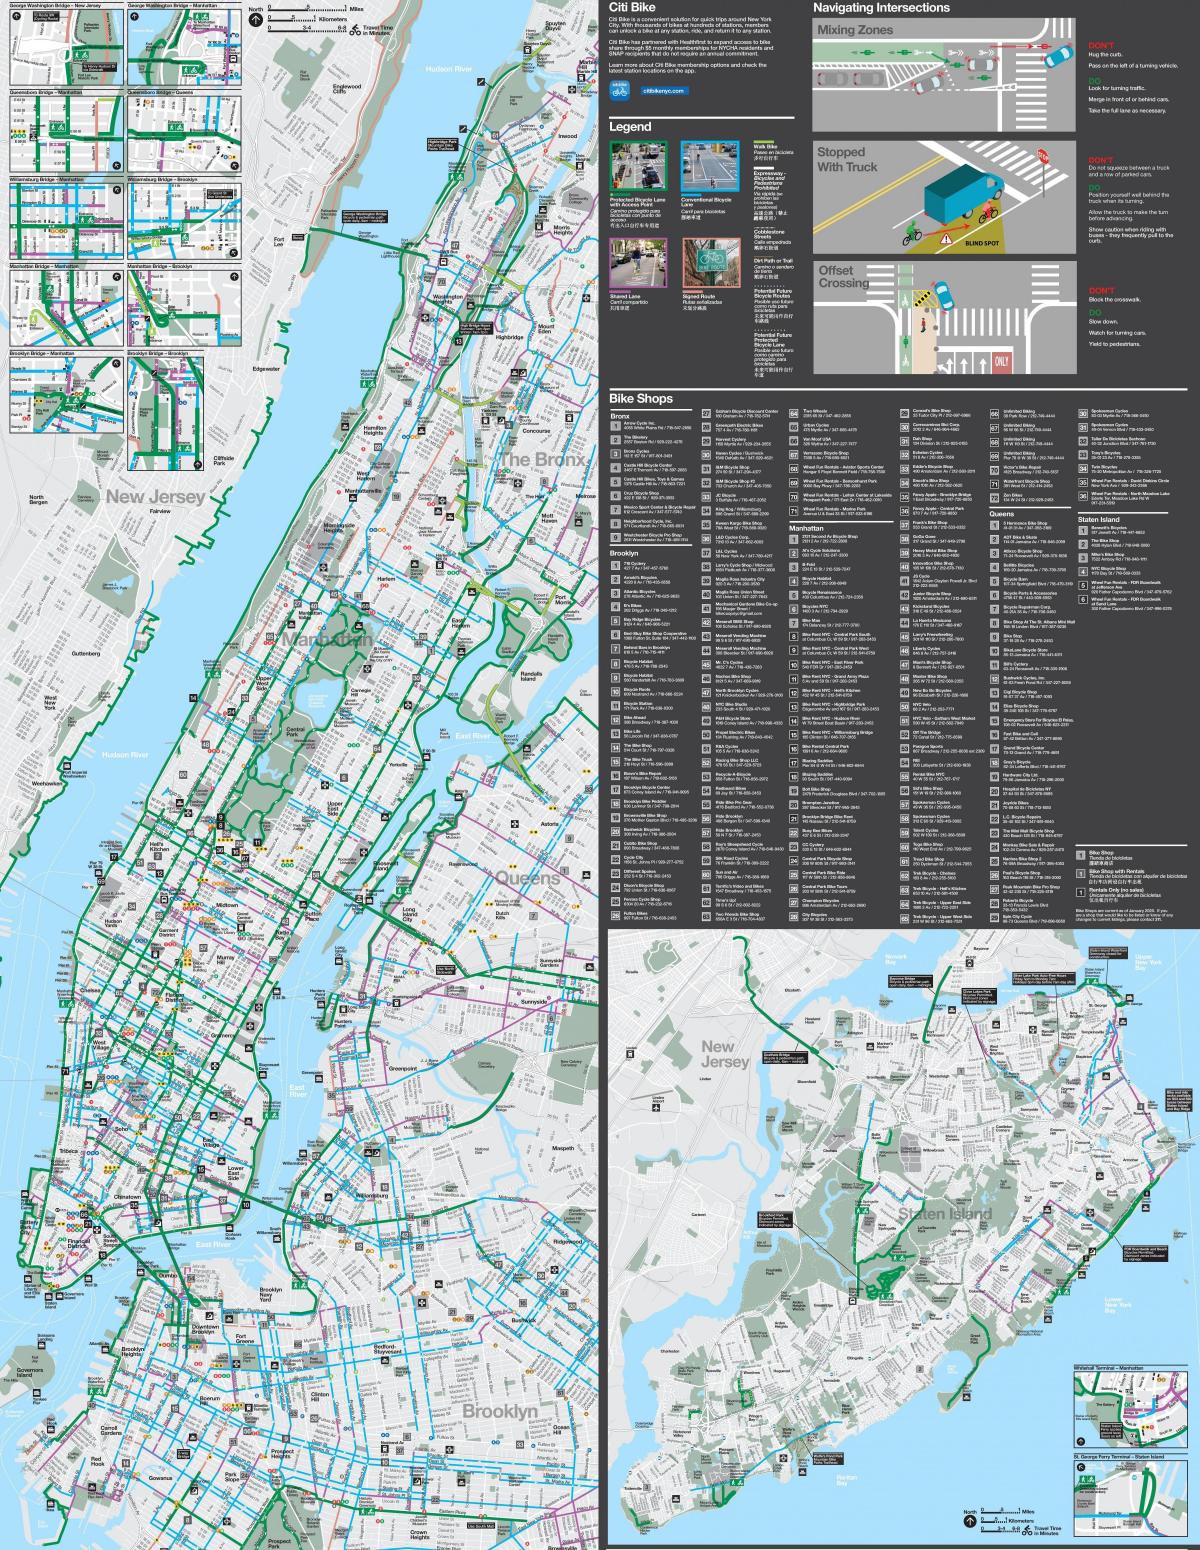 NYC bike lane map NYC cycling map (New York USA)